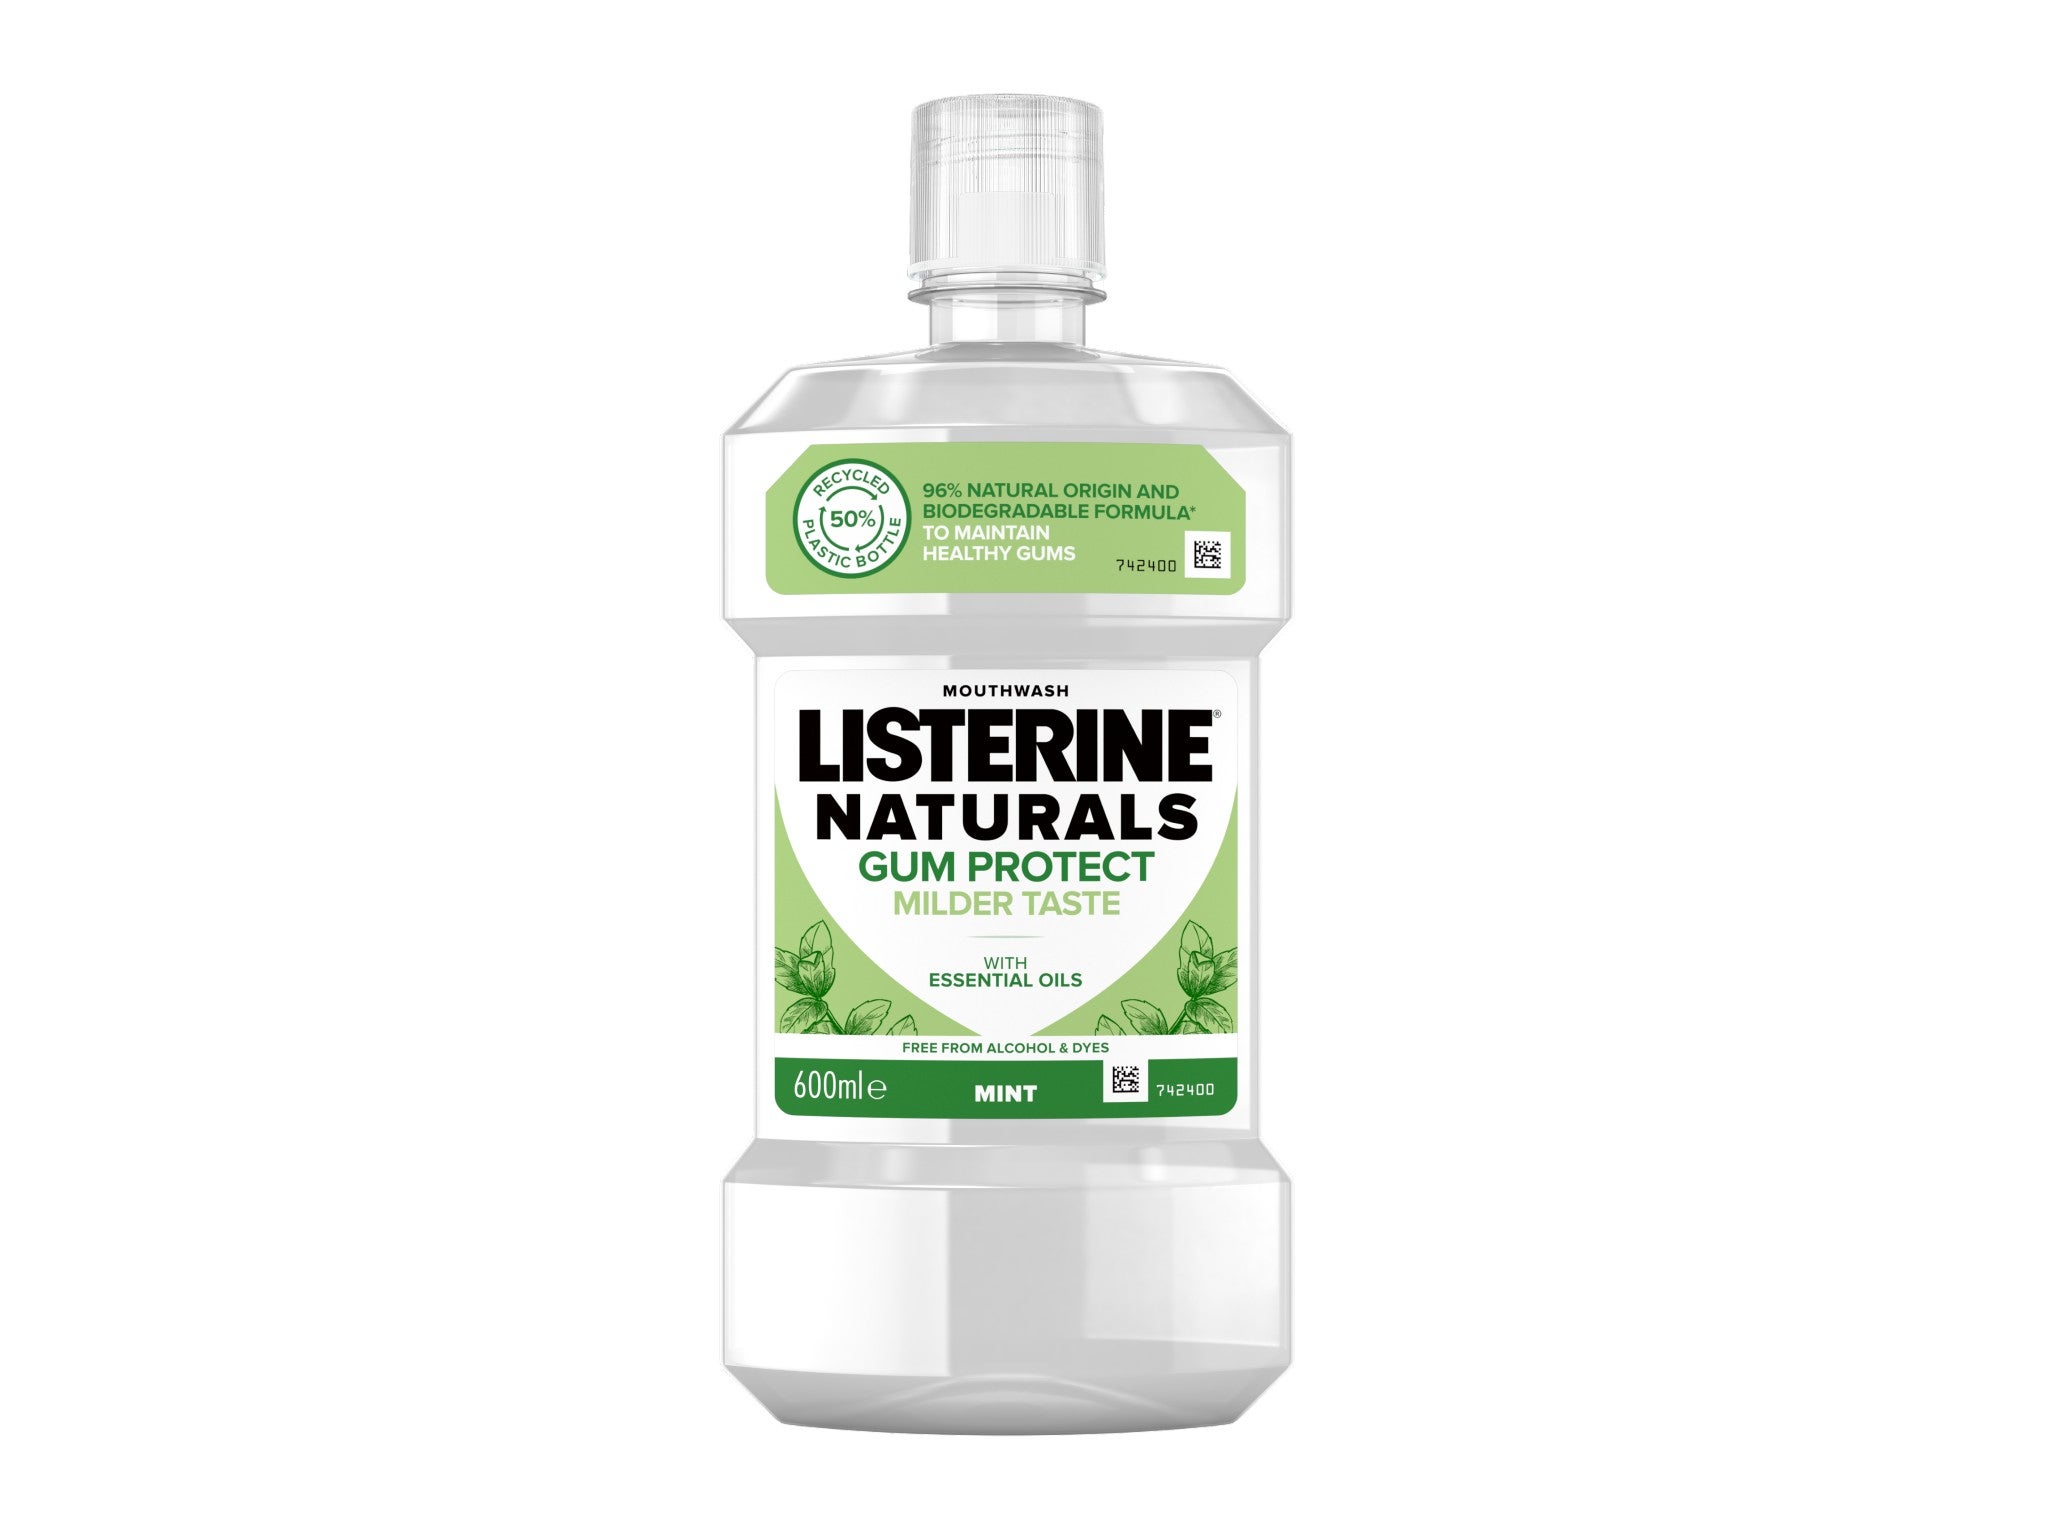 Listerine naturals gum protect indybest.jpg